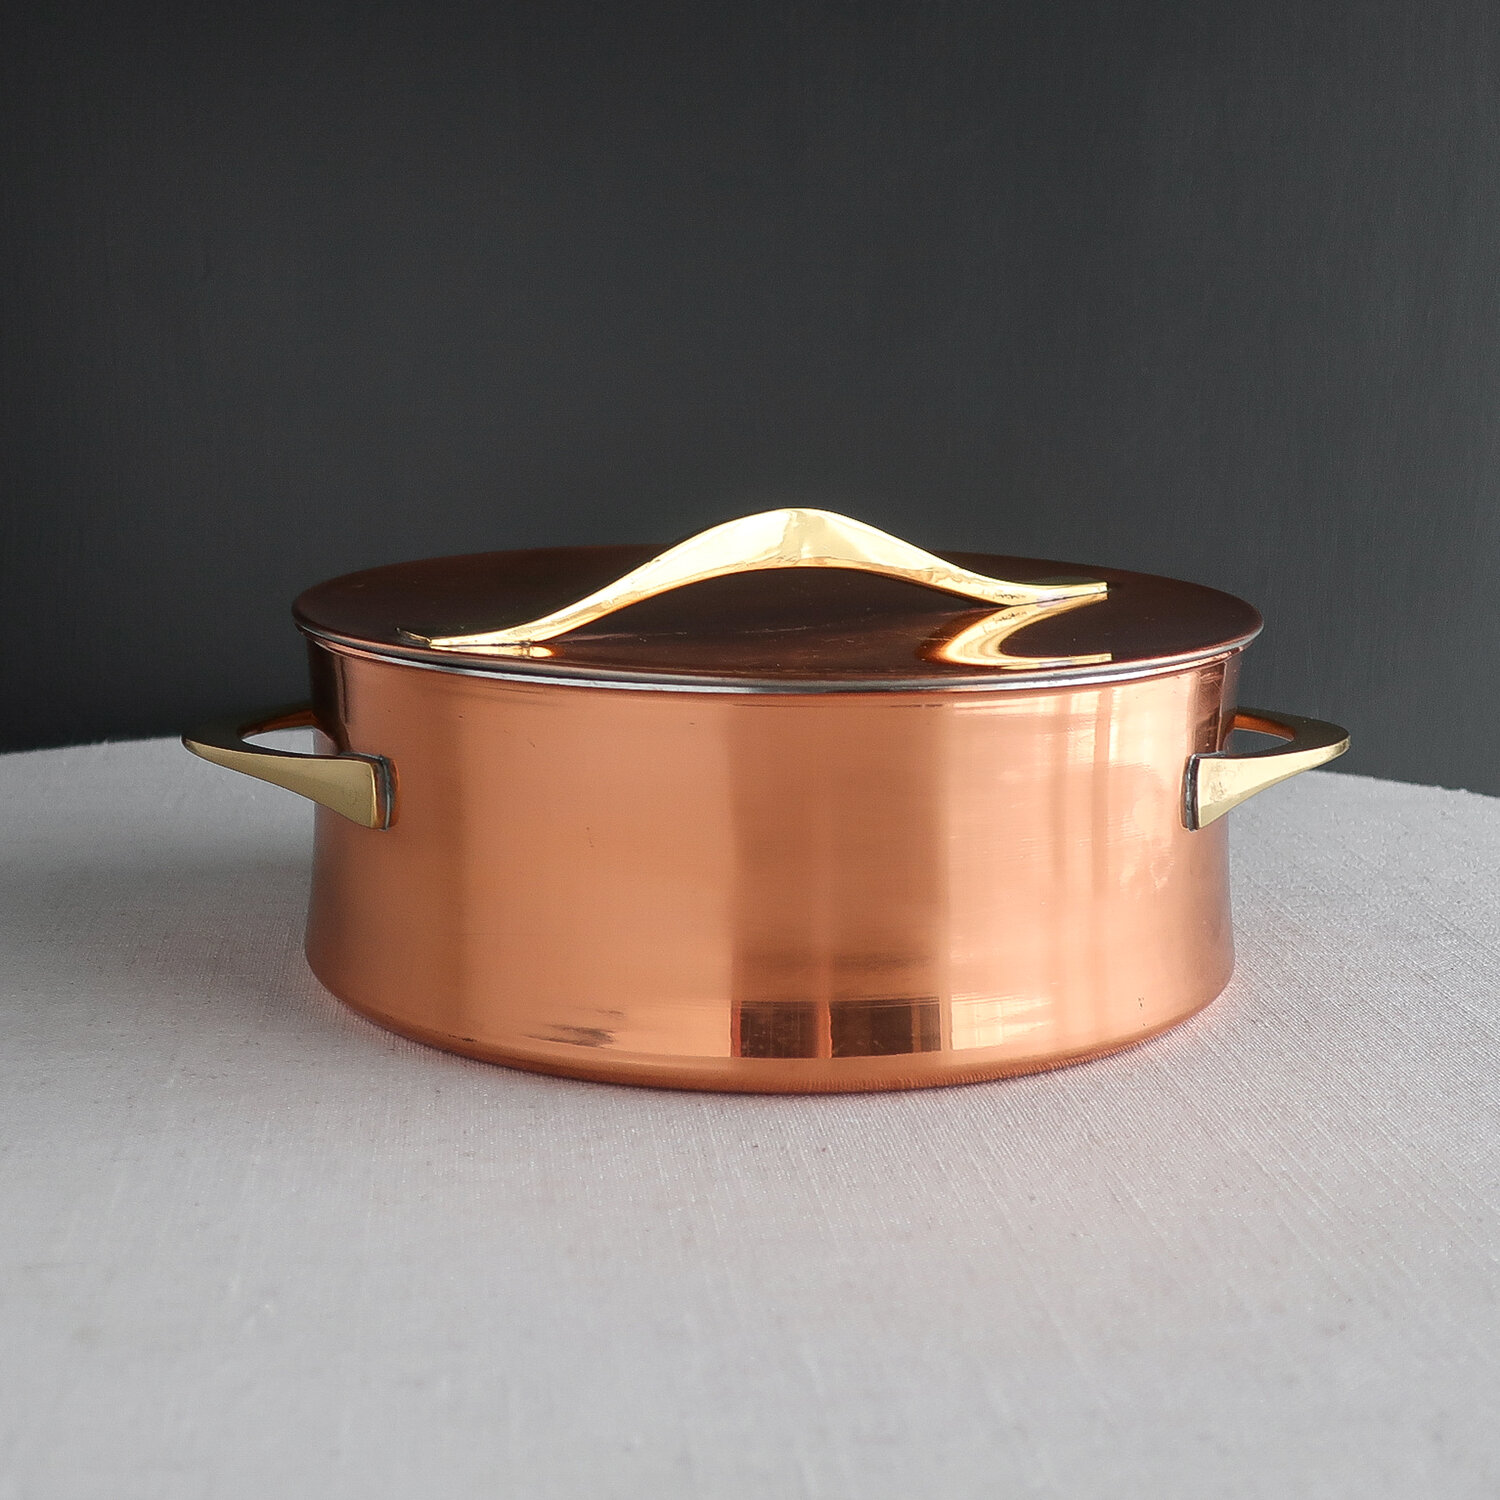 Vintage Dansk Copper Saucepan, circa 1960 - Large 3.5 Quart — Jeni Sandberg